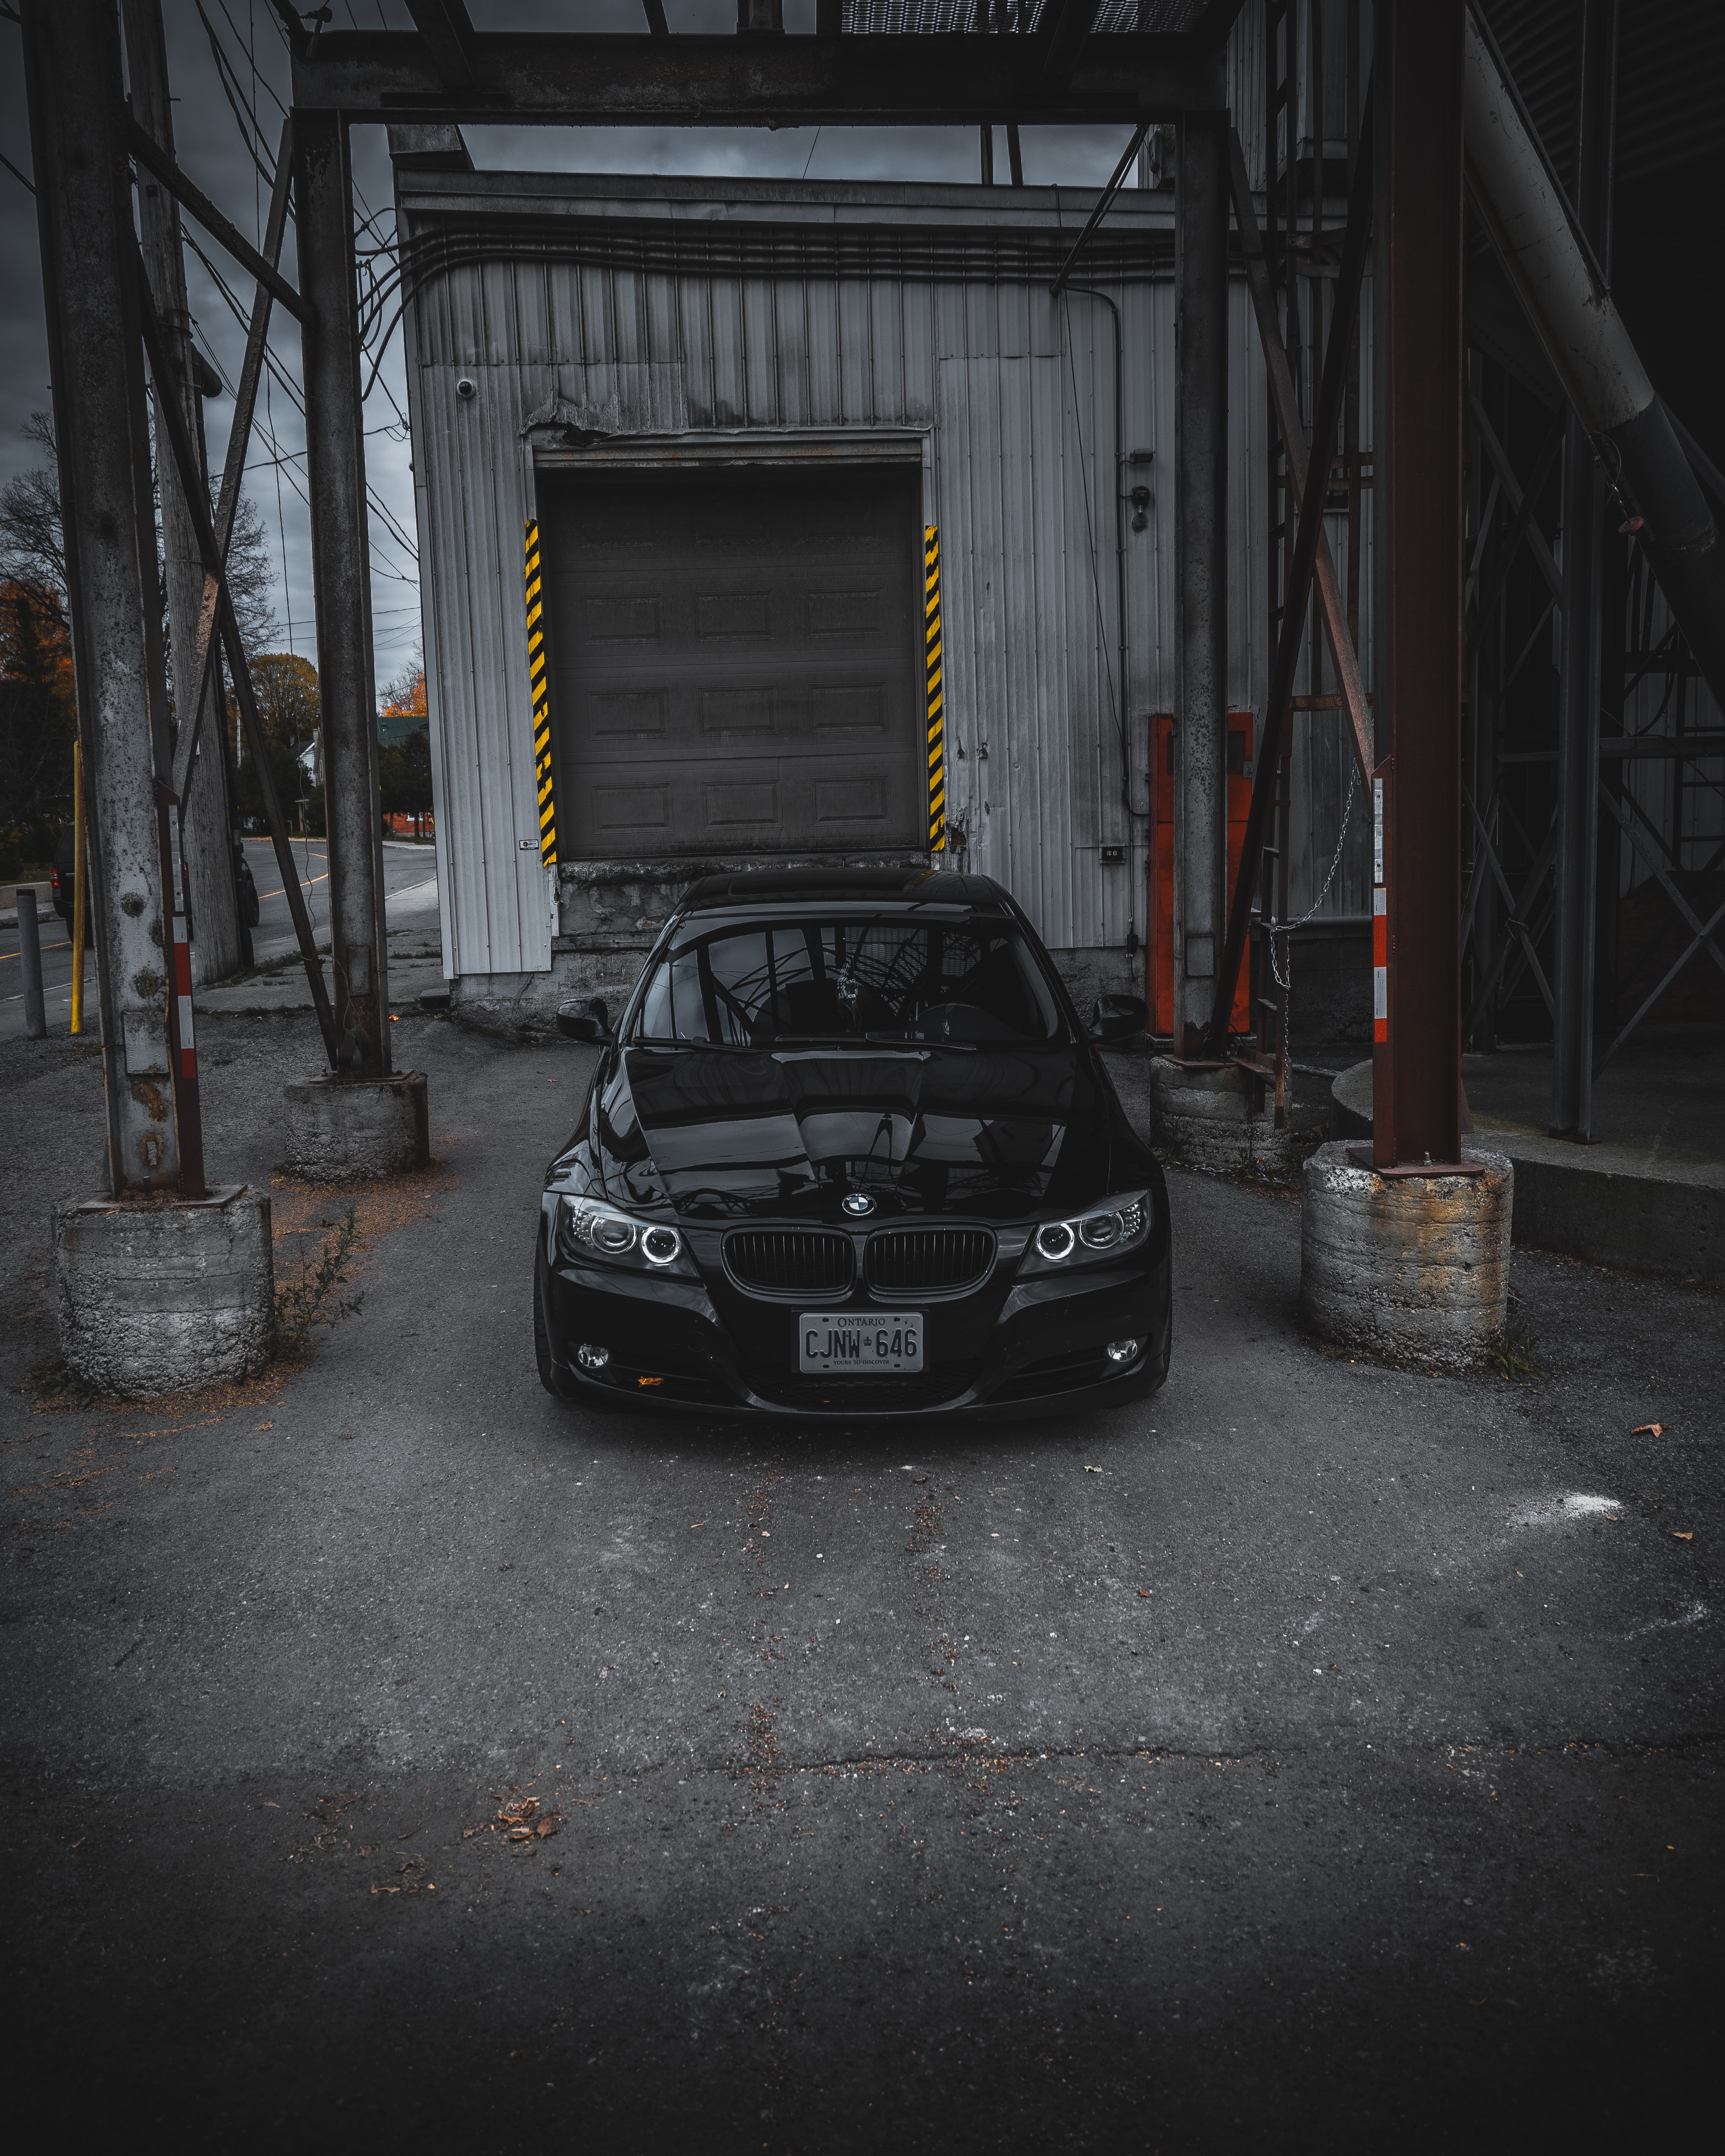 bmw, front view, cars, car, black, garage